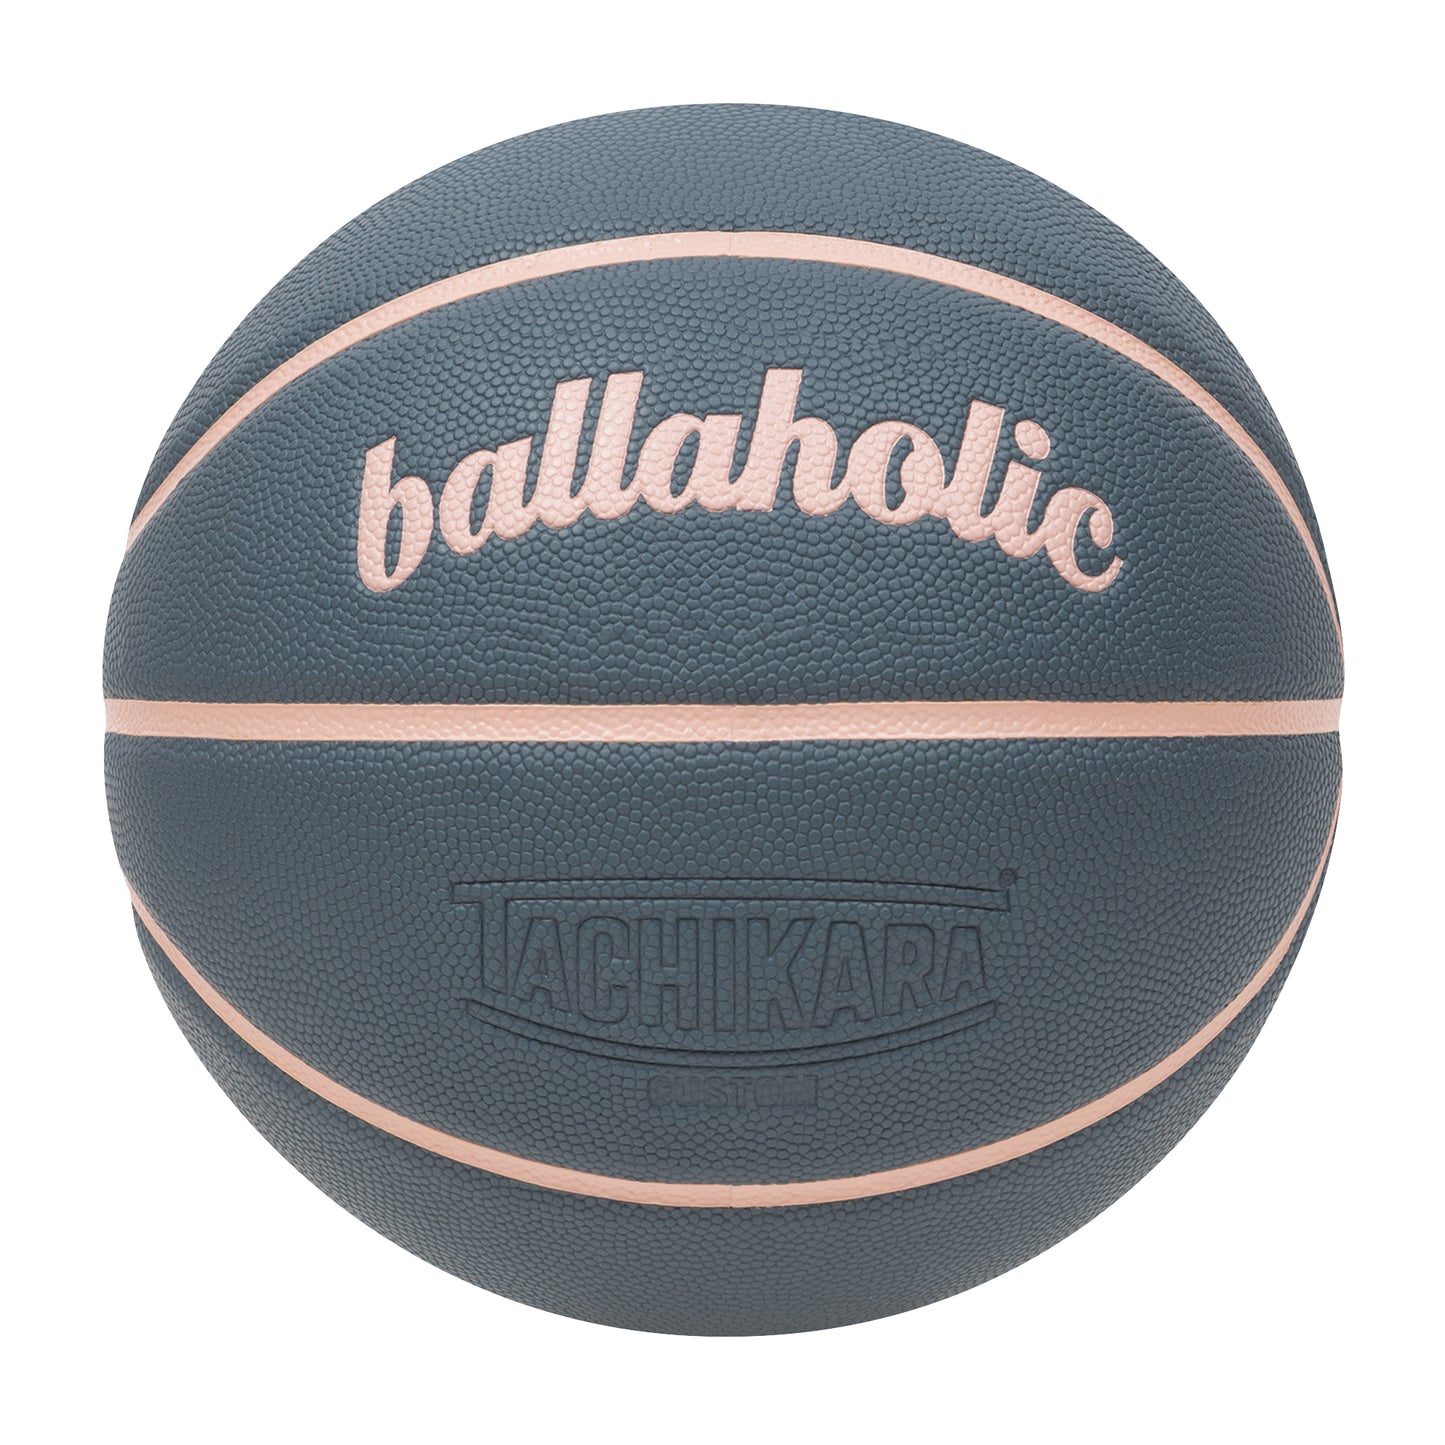 Playground Basketball / ballaholic x TACHIKARA (slate blue/pink) 6